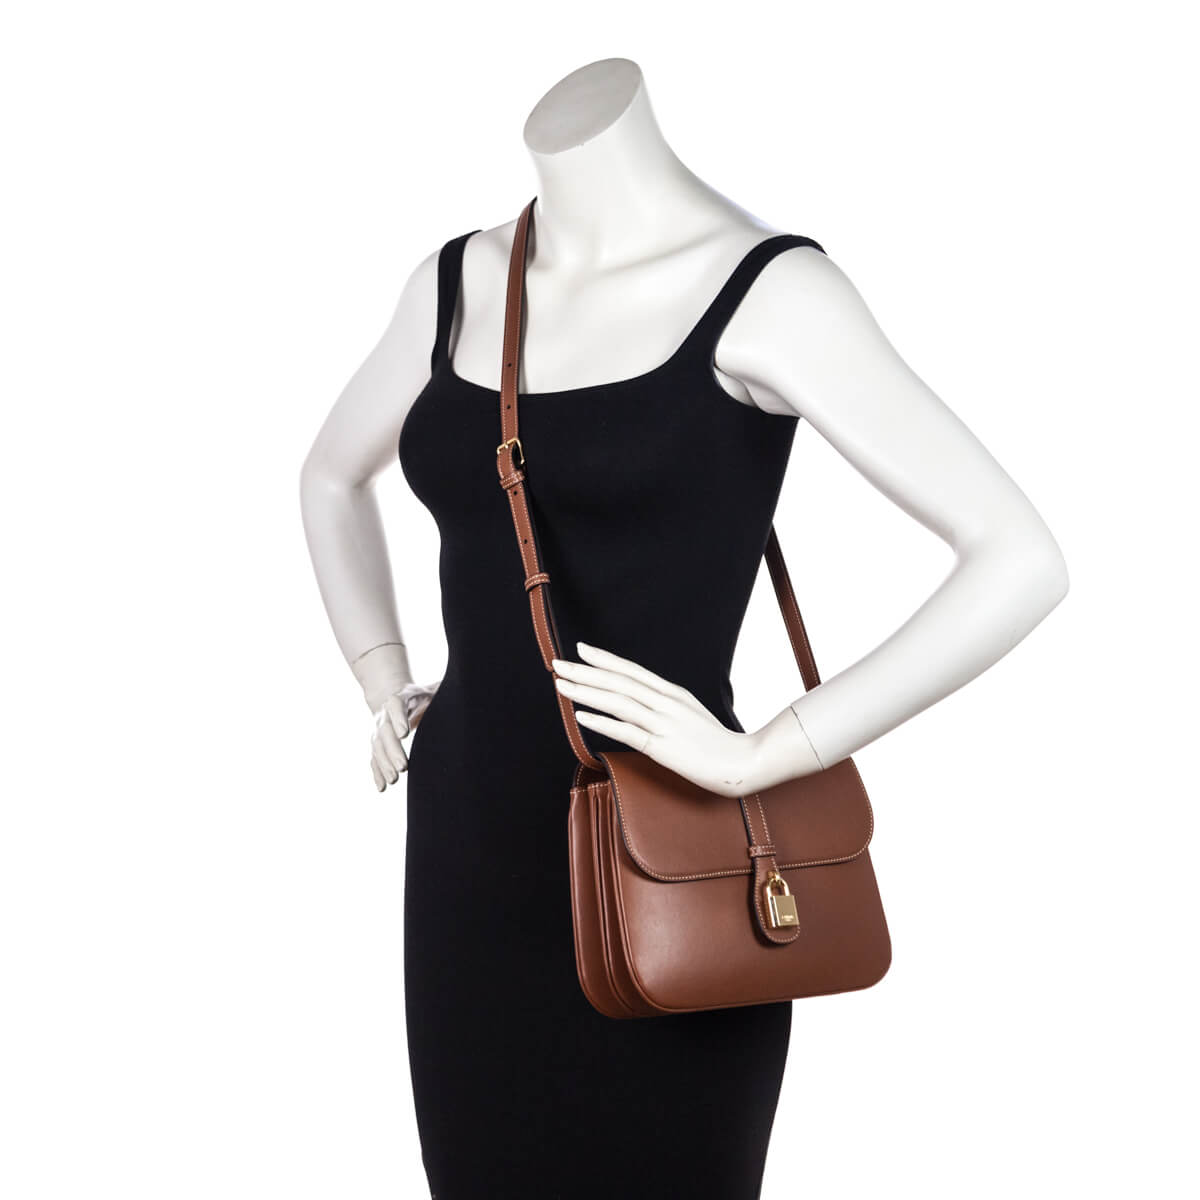 Celine Tan Smooth Calfskin Medium Tabou Bag - Love that Bag etc - Preowned Authentic Designer Handbags & Preloved Fashions